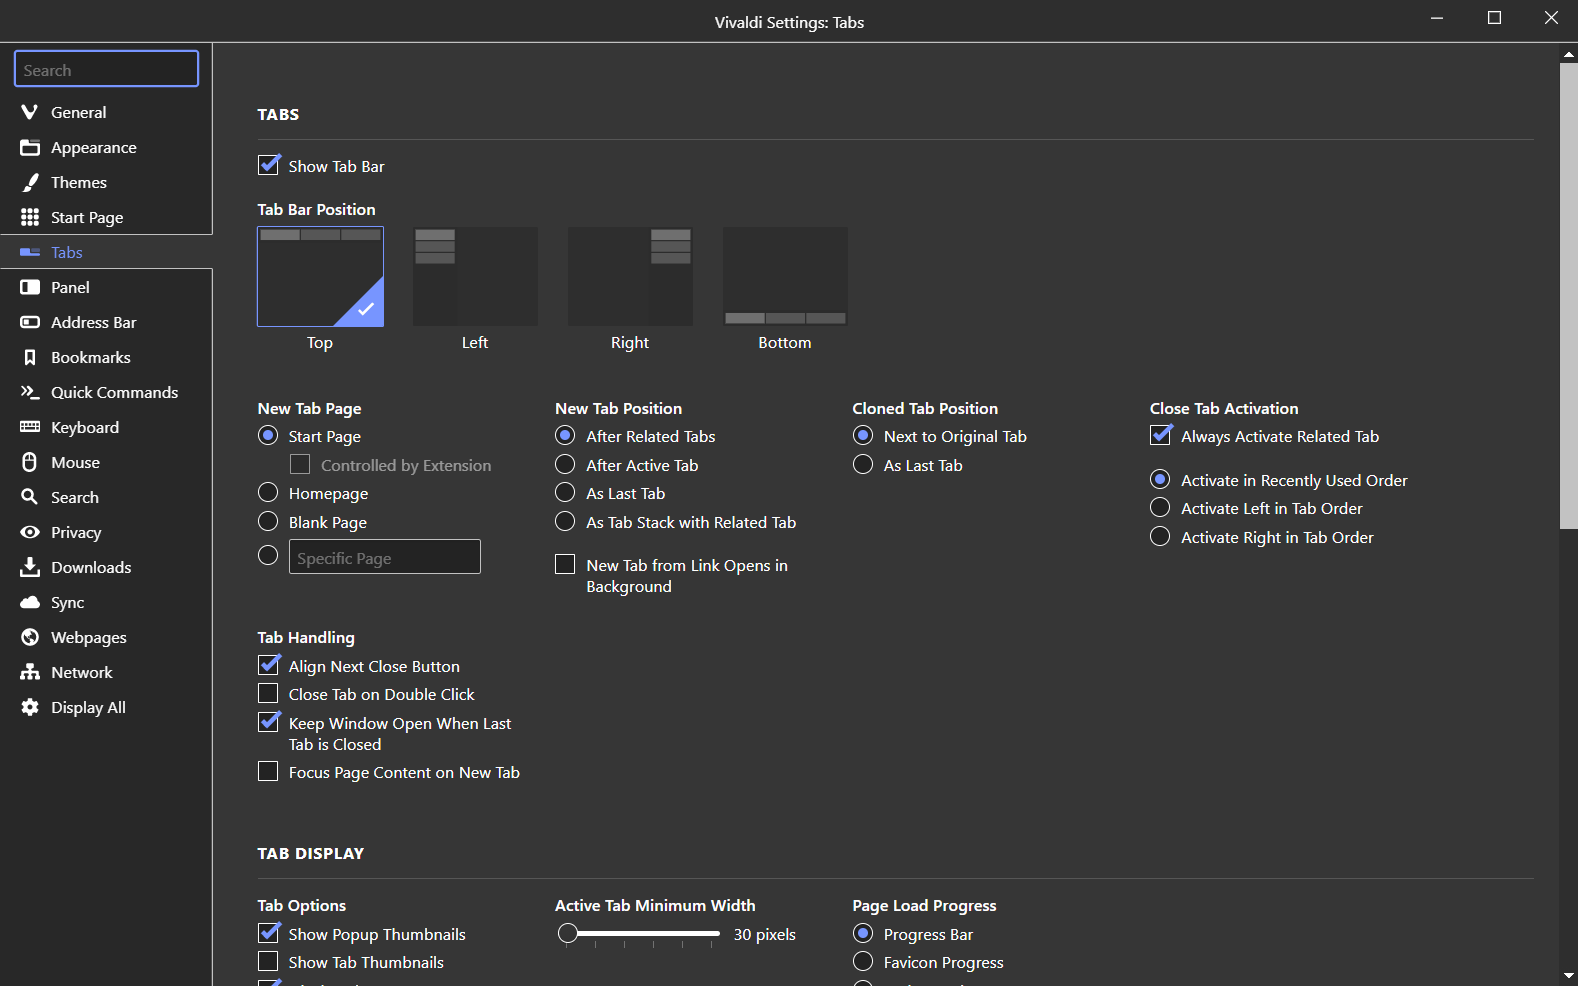 Vivaldi Settings best customizable browser